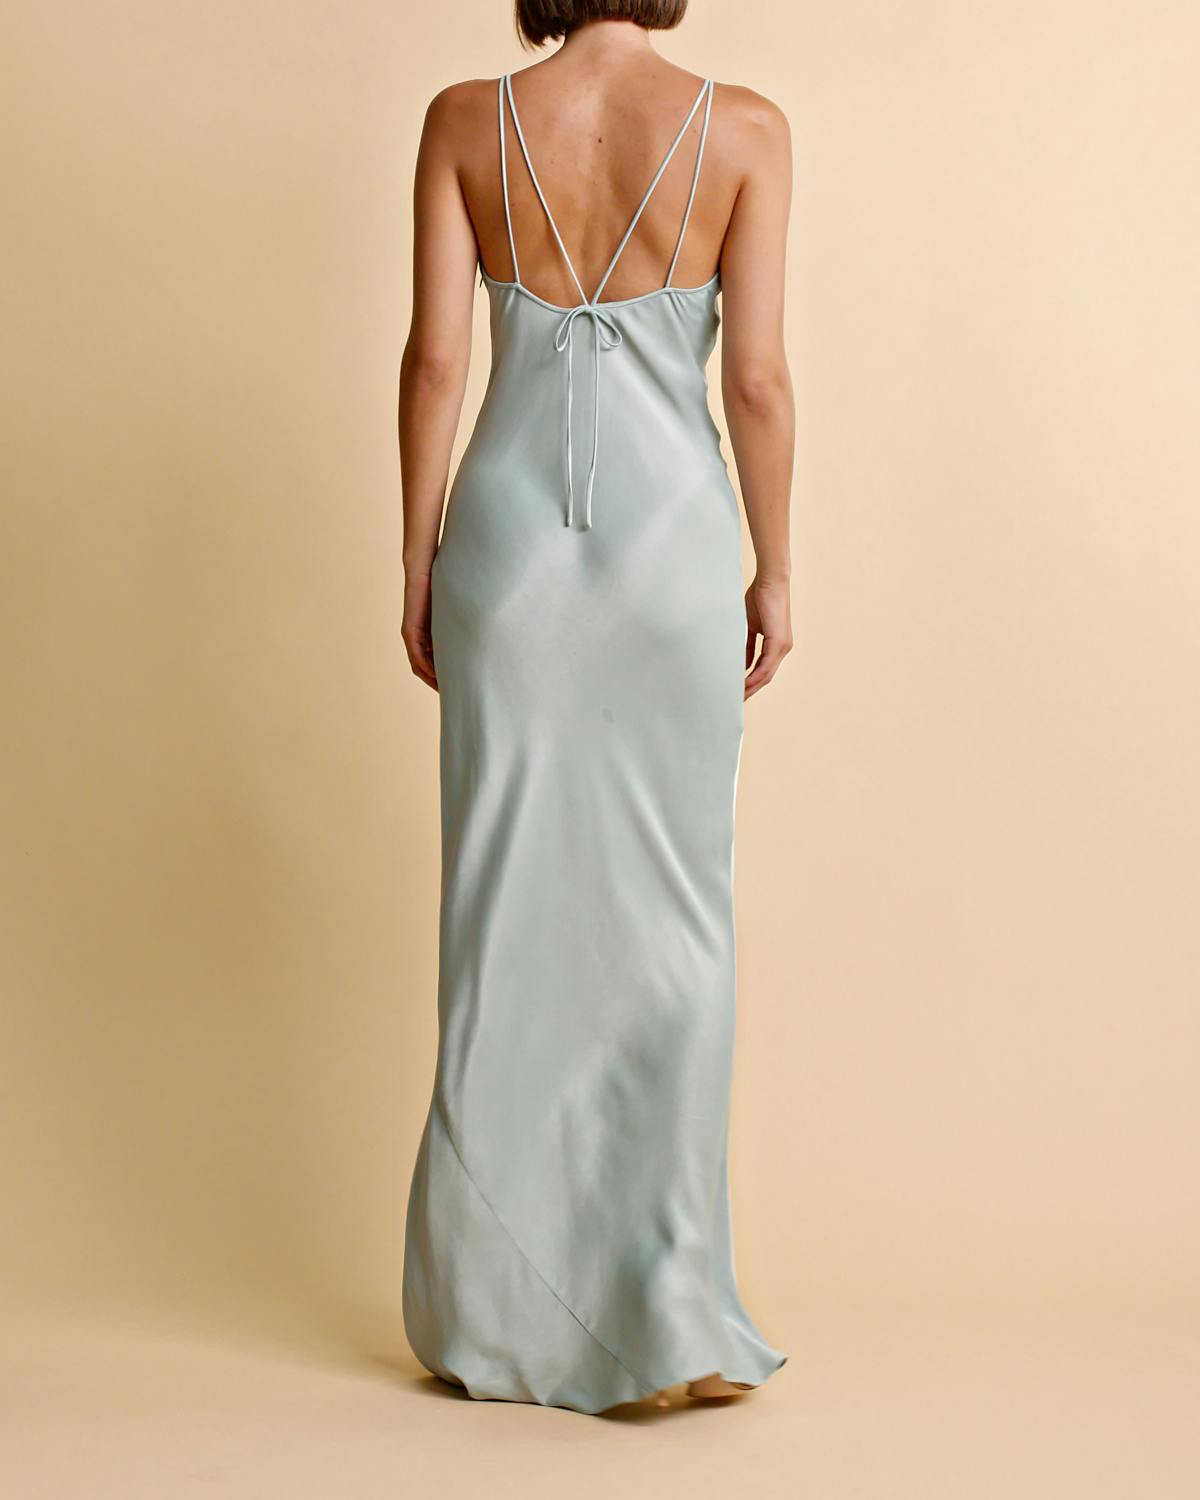 Crepe Satin Strap Dress, Turquoise. Image #6